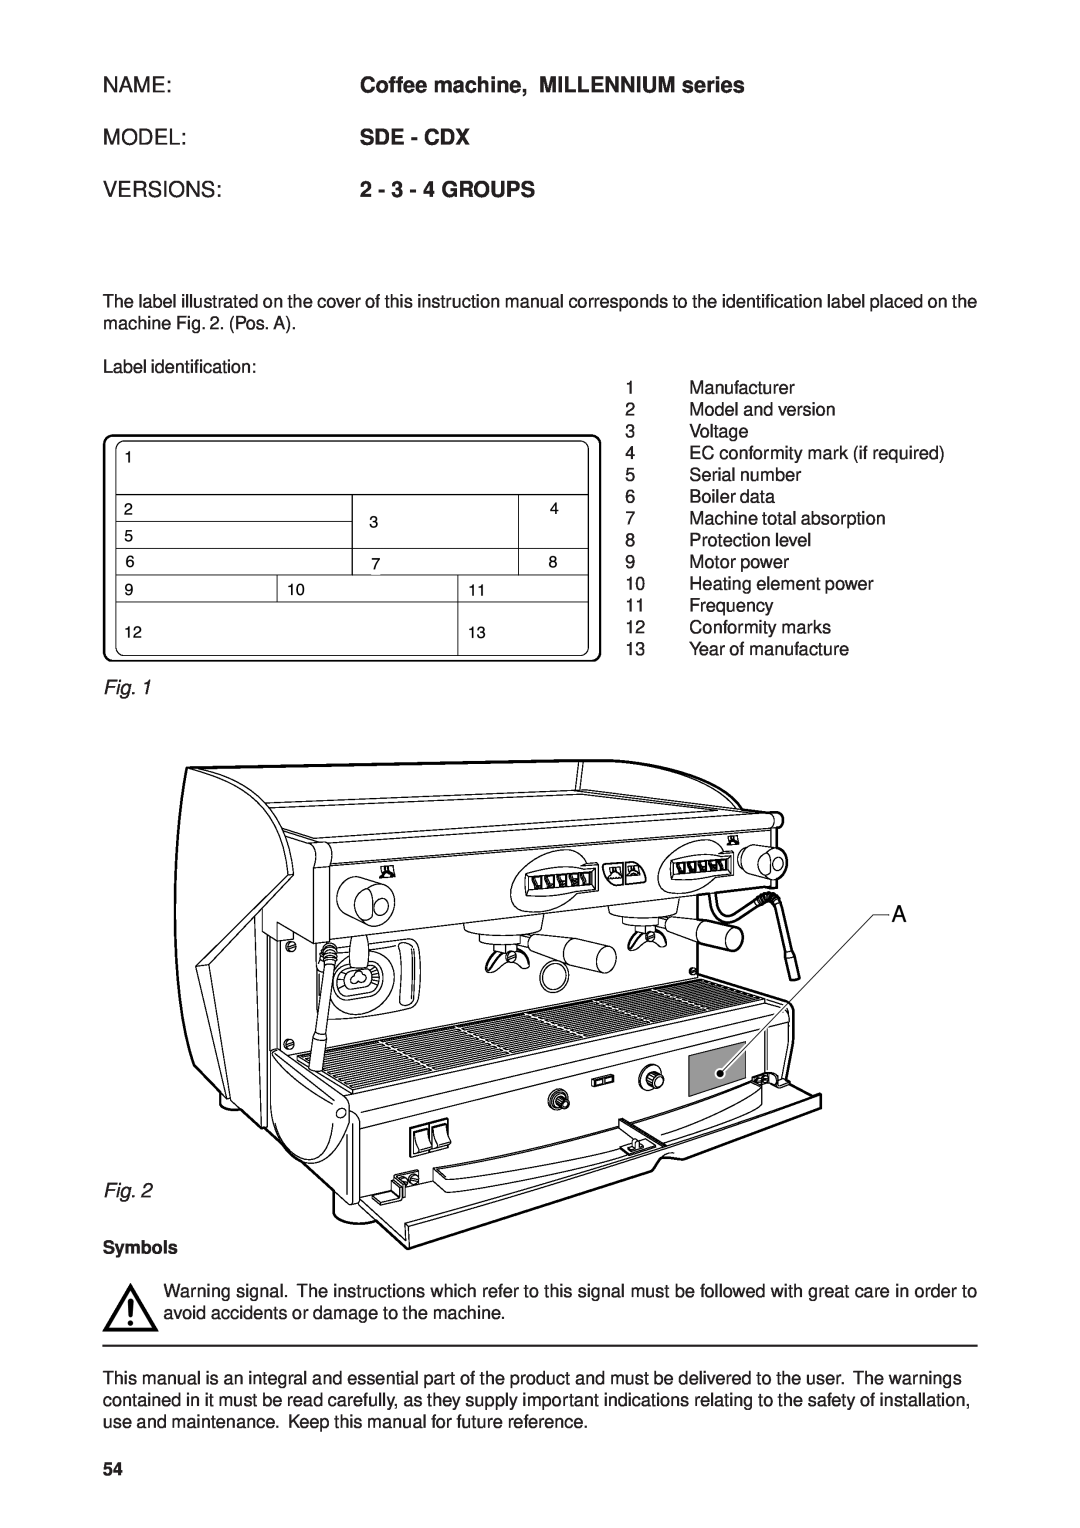 Rancilio Millennium manual Name, Coffee machine, MILLENNIUM series, Model, Sde - Cdx, Versions, 2 - 3 - 4 GROUPS 